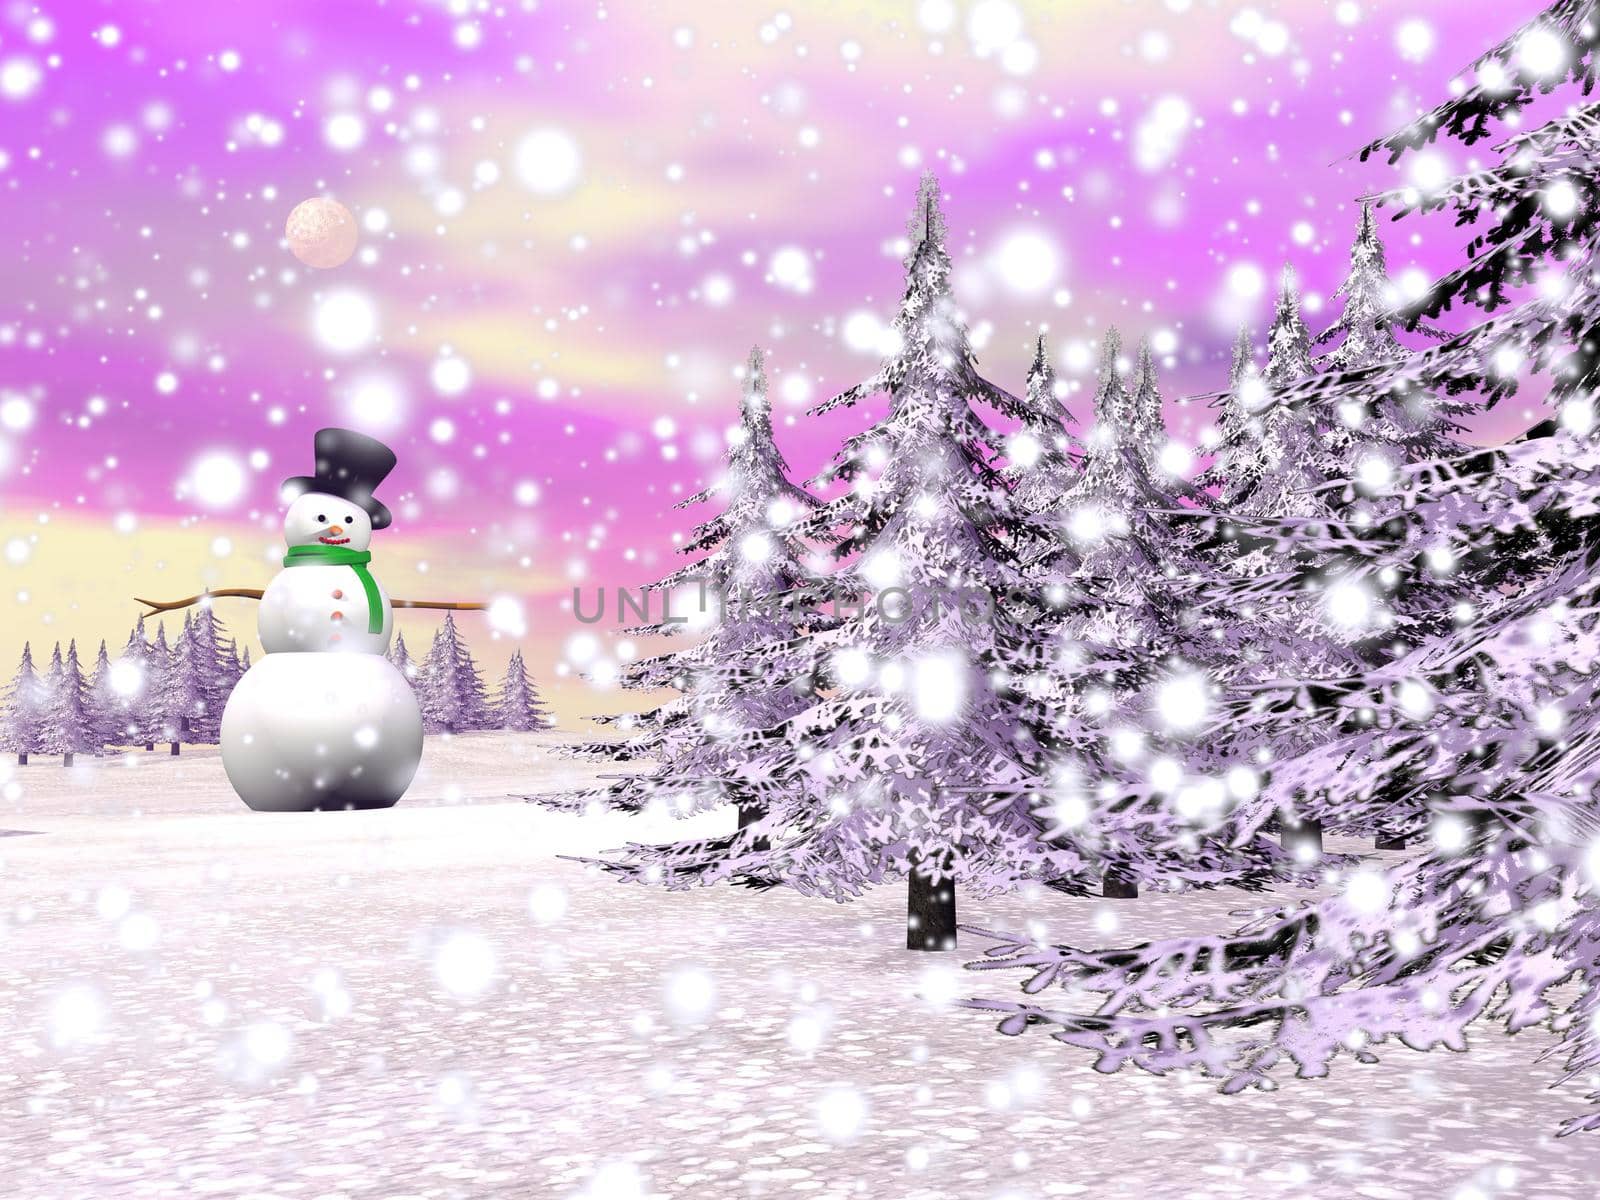 Snowman under the snow - 3D render by Elenaphotos21